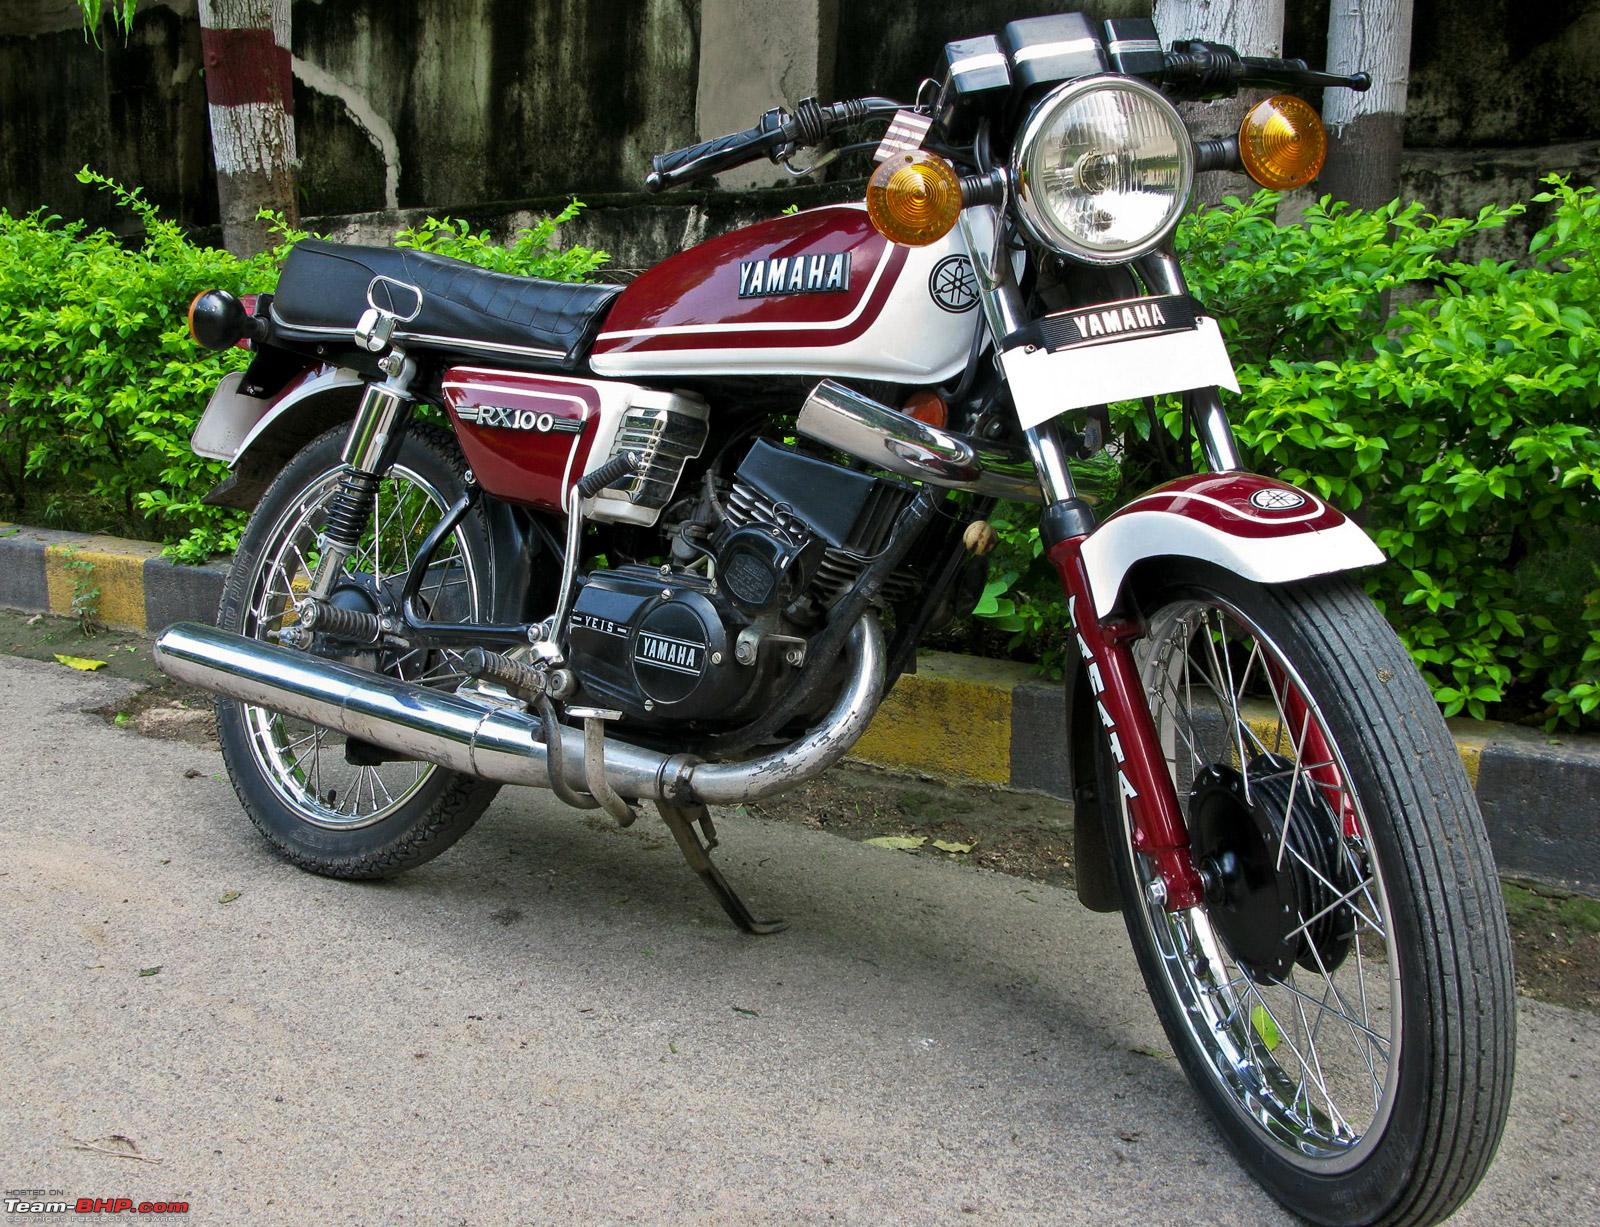 2 Stroke Motorcycle Legends Of India Yamaha Rx100 Rd 350 To Yezdi 350